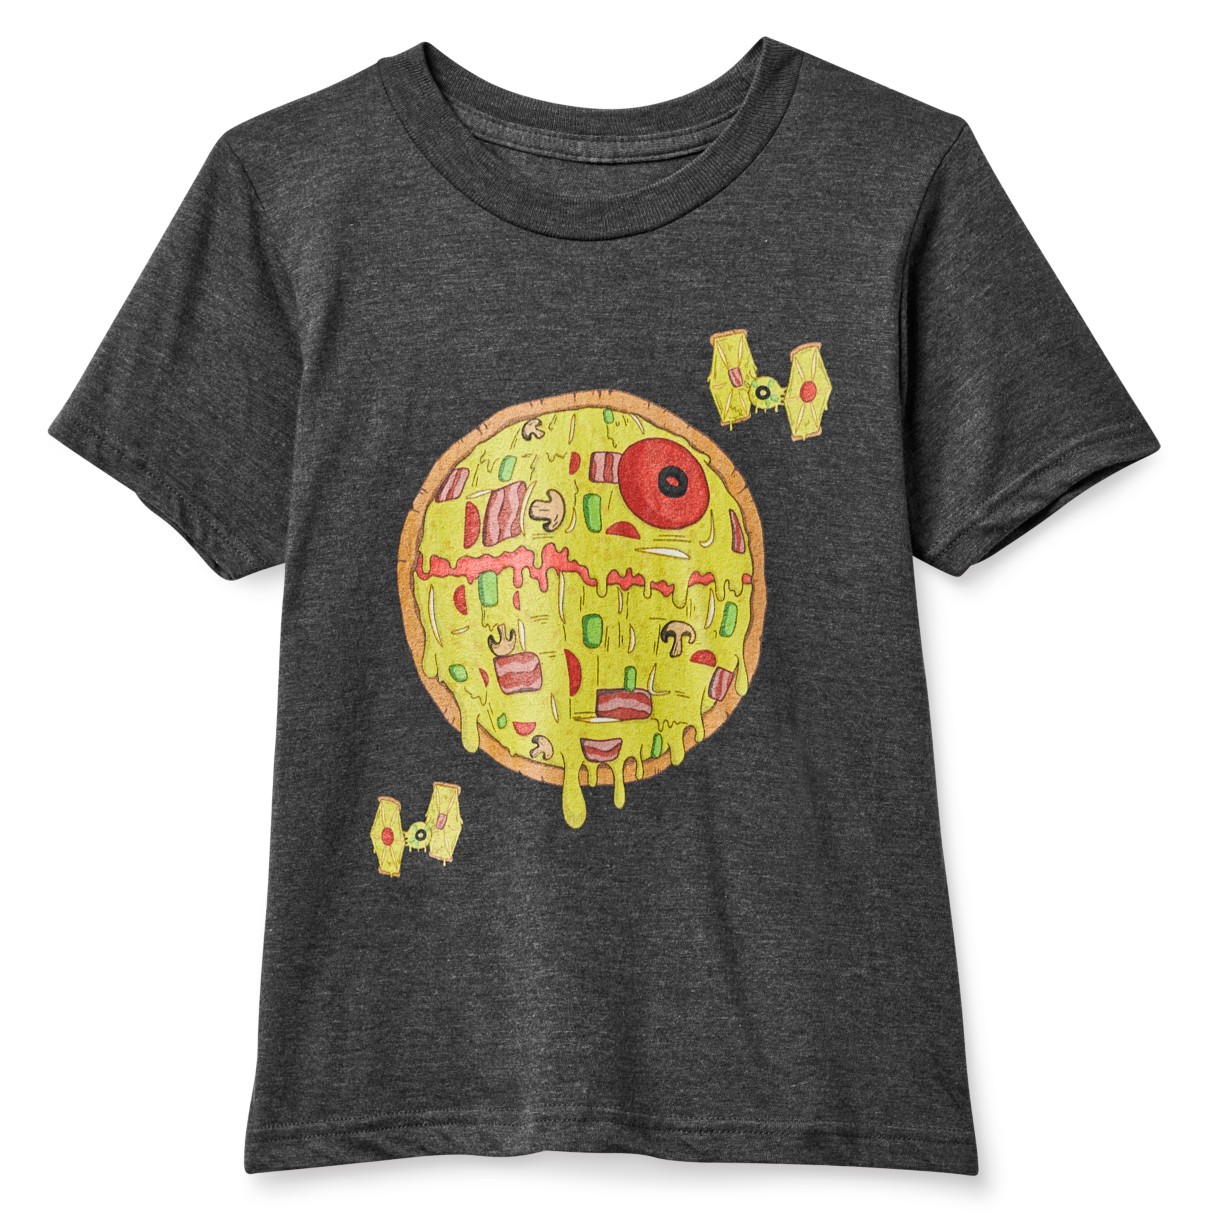 Death Star Pizza T-Shirt for Kids – Star Wars